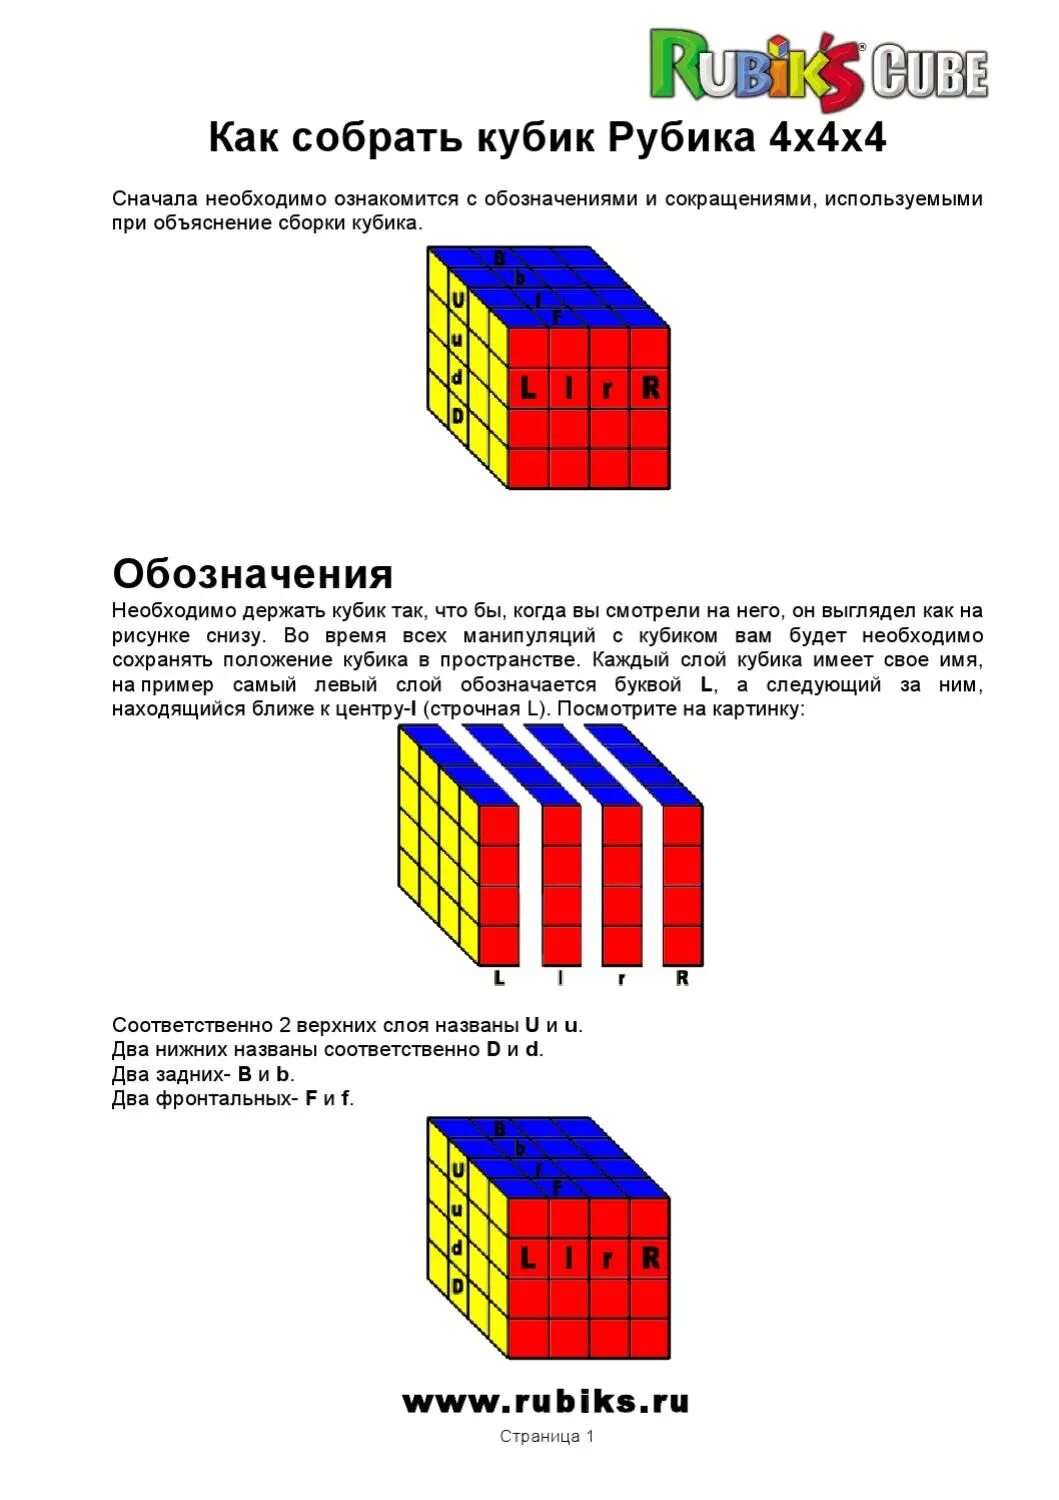 Формулы сбора кубика 4 на 4. Схема сборки кубика Рубика 4х4. Формулы кубика Рубика 4х4. Схема кубика Рубика 4 на 4. Паритеты 4 на 4